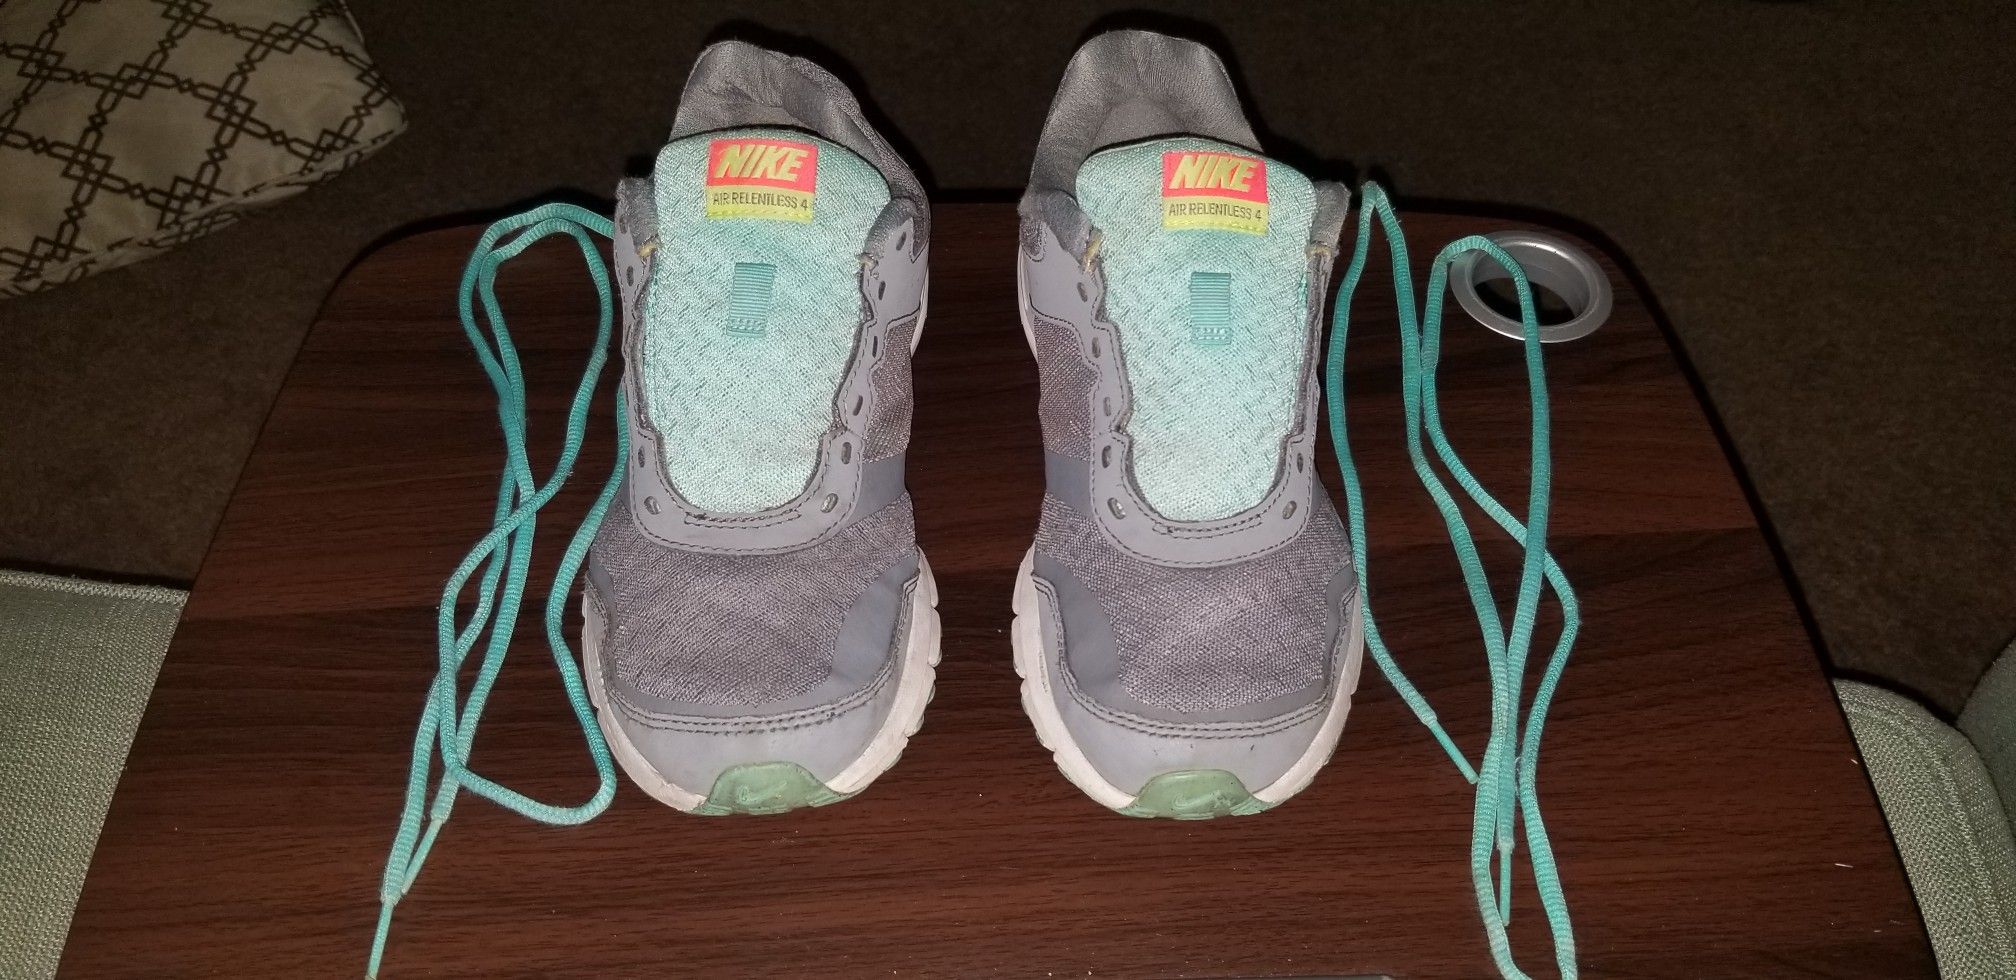 NIKE 684042-004 Air Relentless running track shoes sneakers women US 7